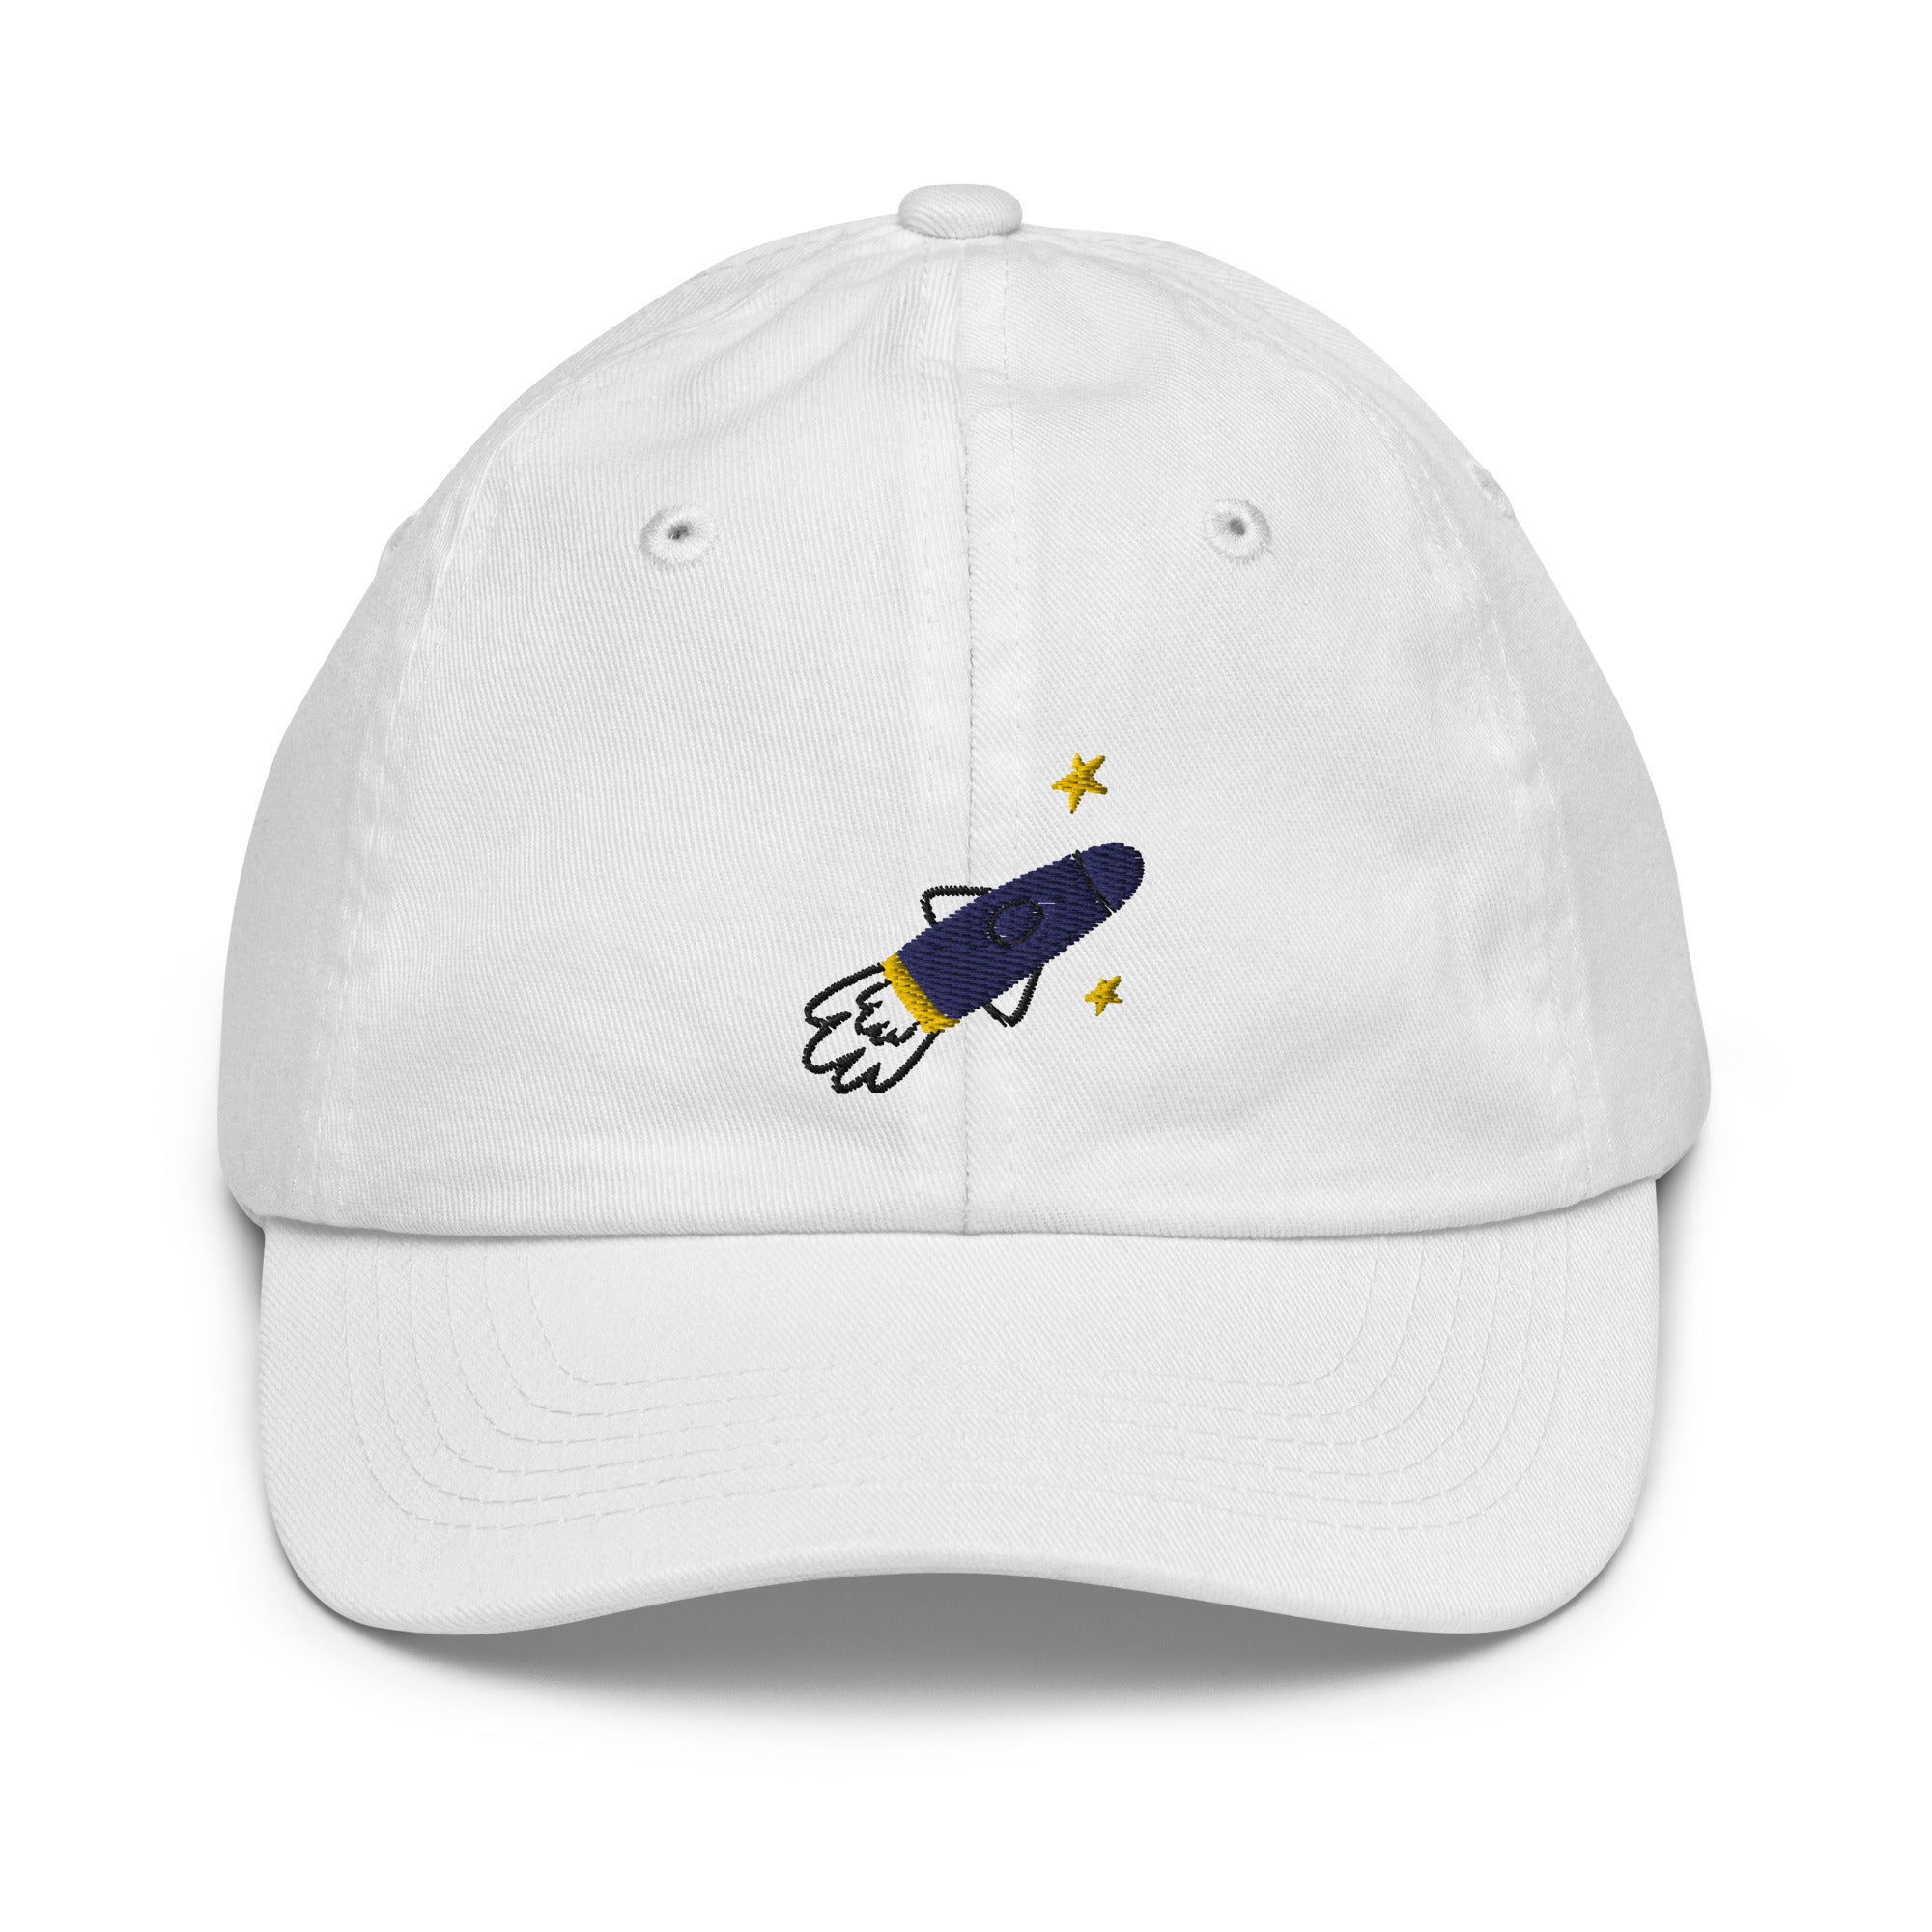 White kids cap with a rocket ship design